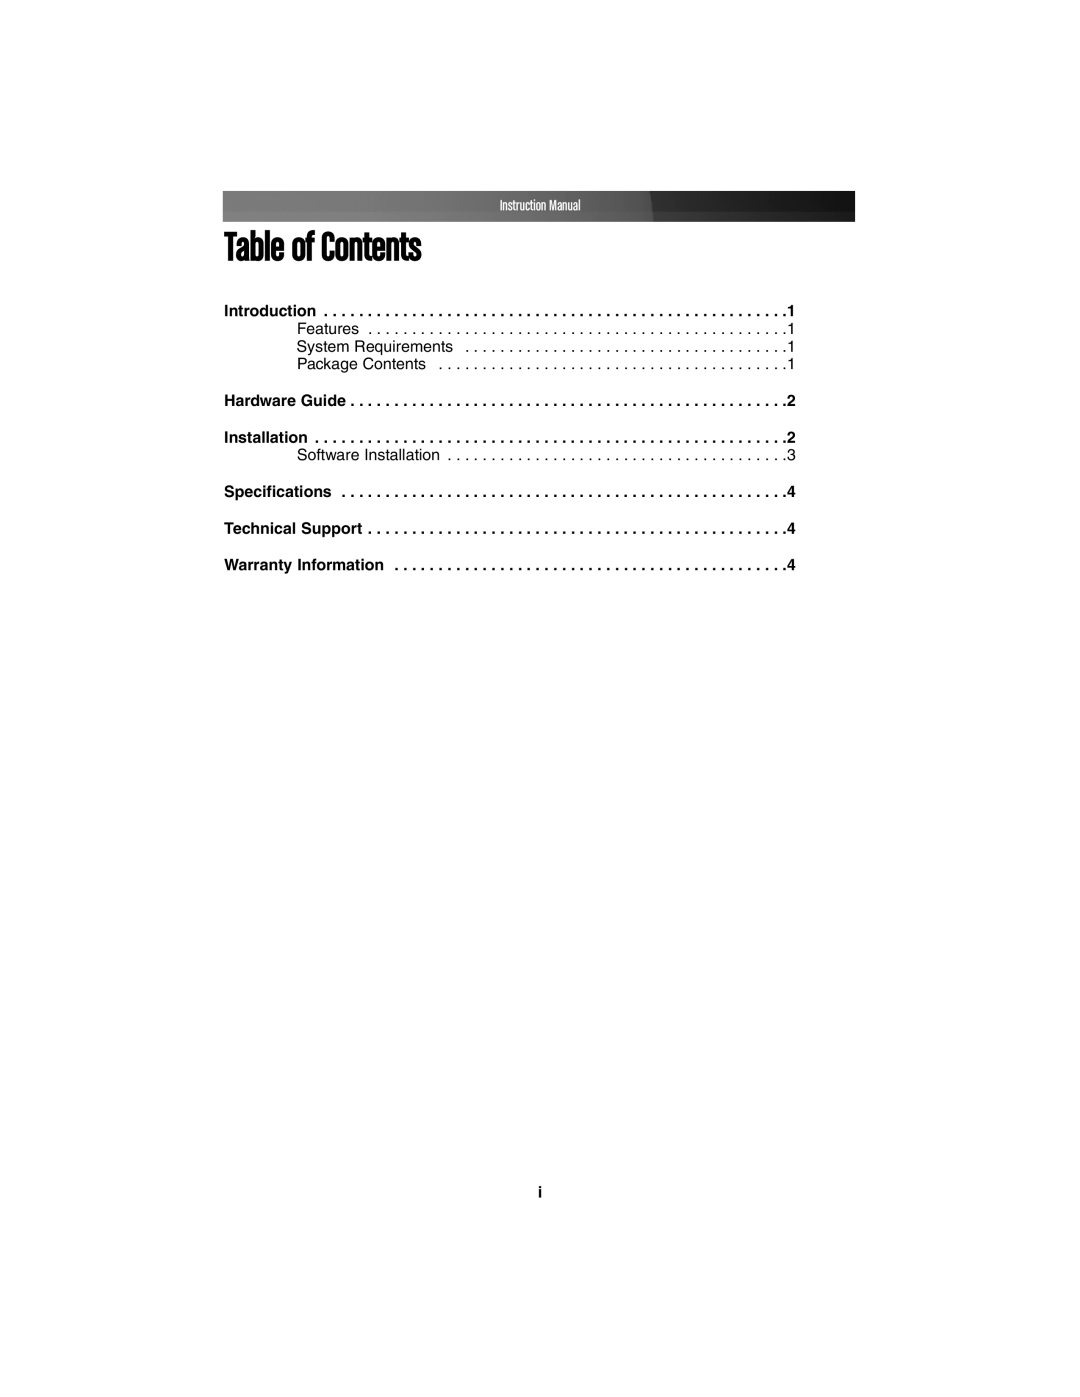 StarTech.com PCI3UV22F instruction manual Table of Contents, Instruction Manual, Introduction, Hardware Guide Installation 